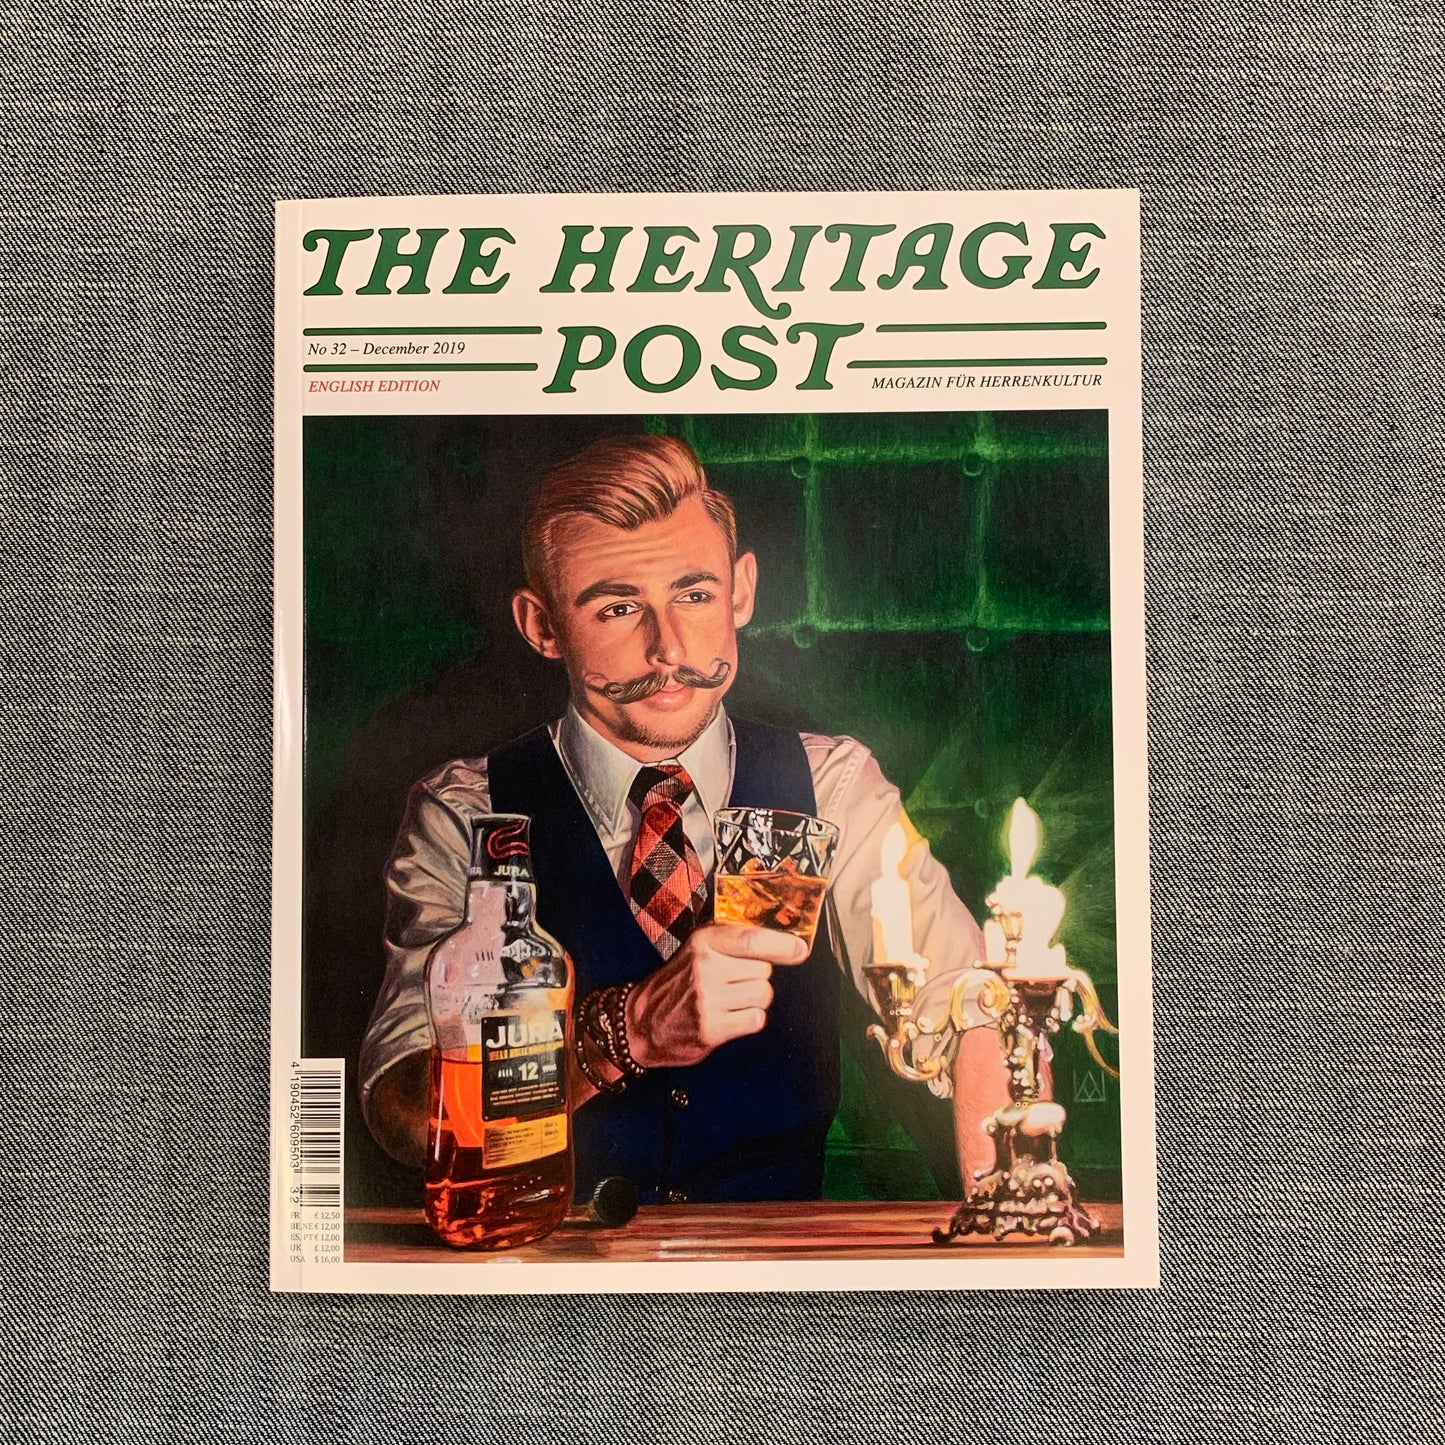 The Heritage Post - vol 32